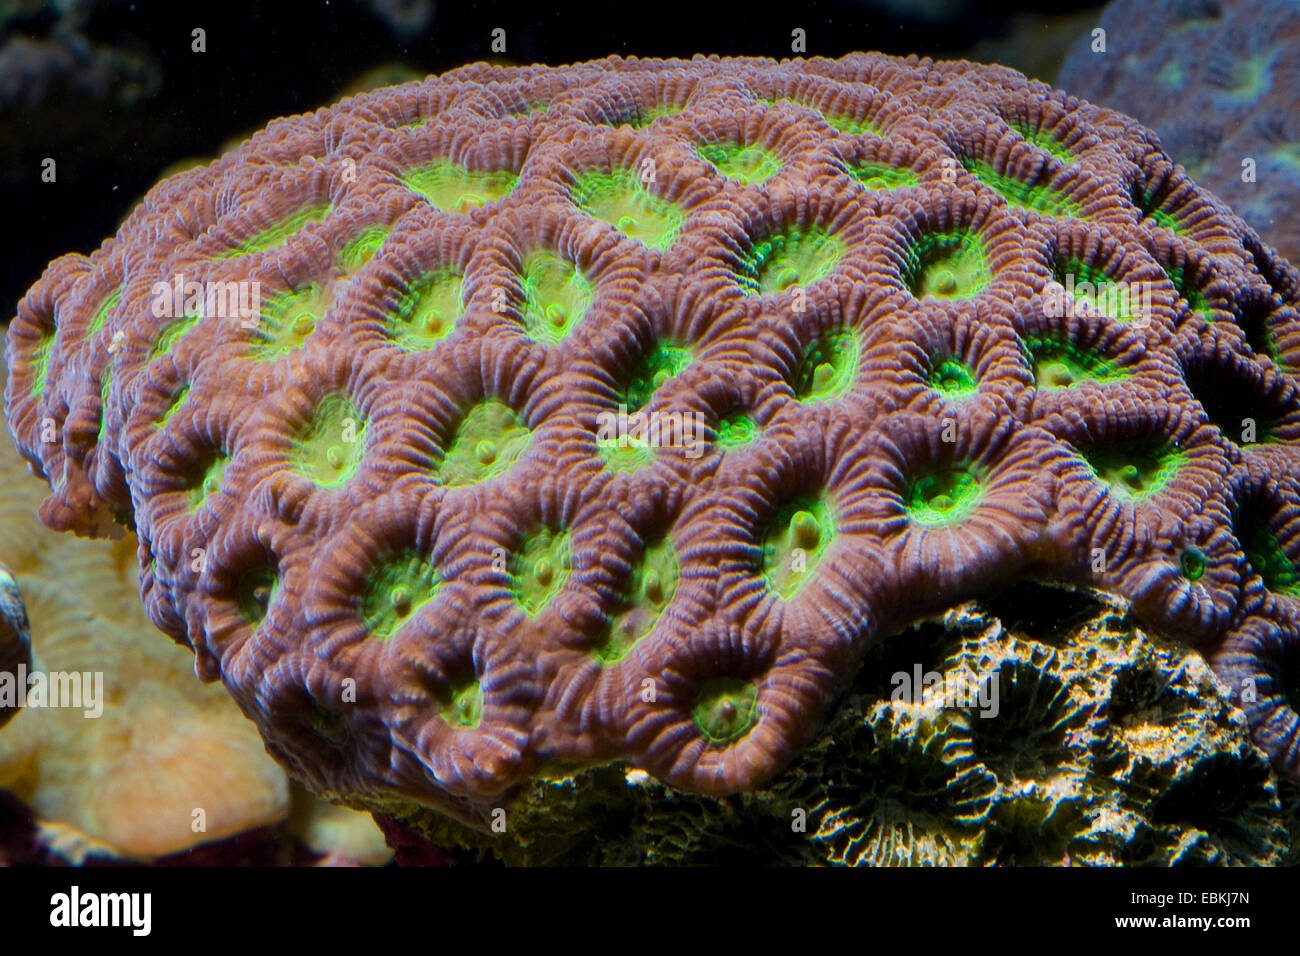 Brain Coral (Favia spec.), close-up view Stock Photo